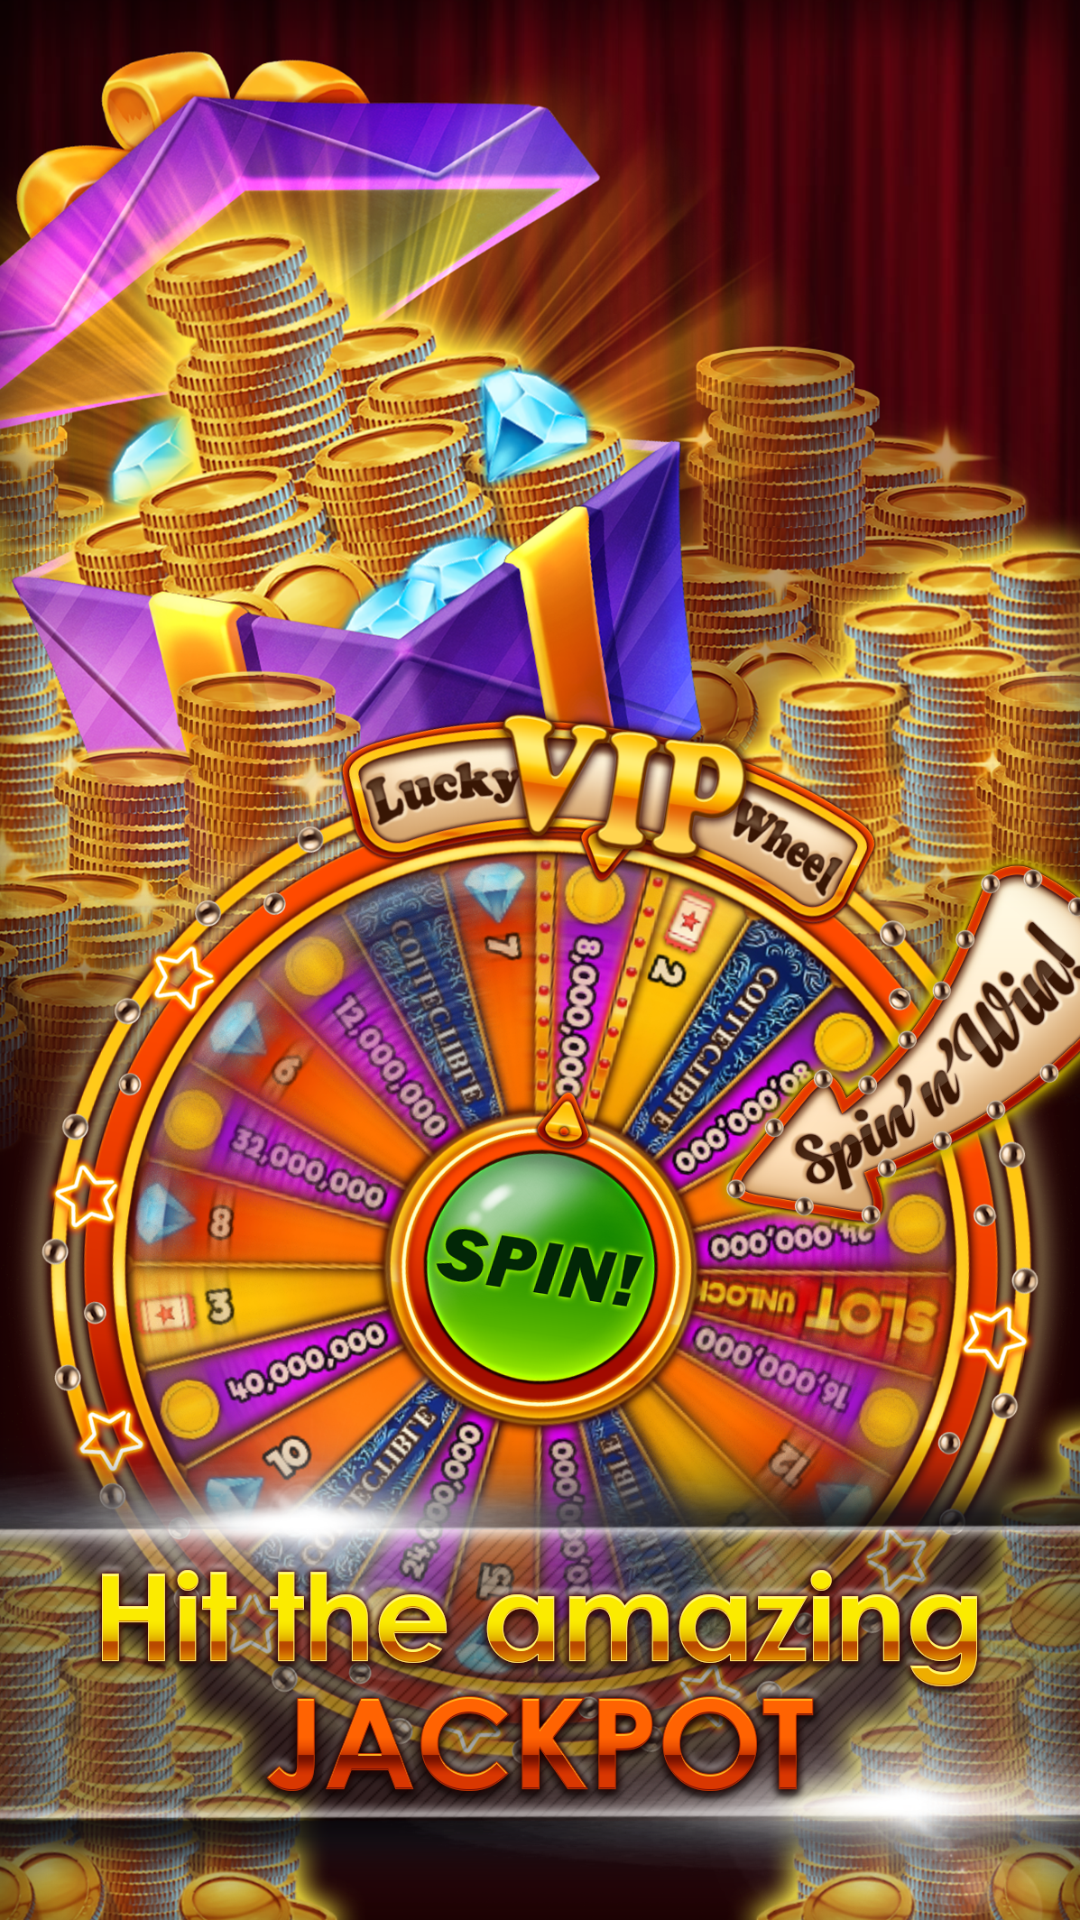 Juegos tragamonedas gratis cheques Bitcoins casino - 64007